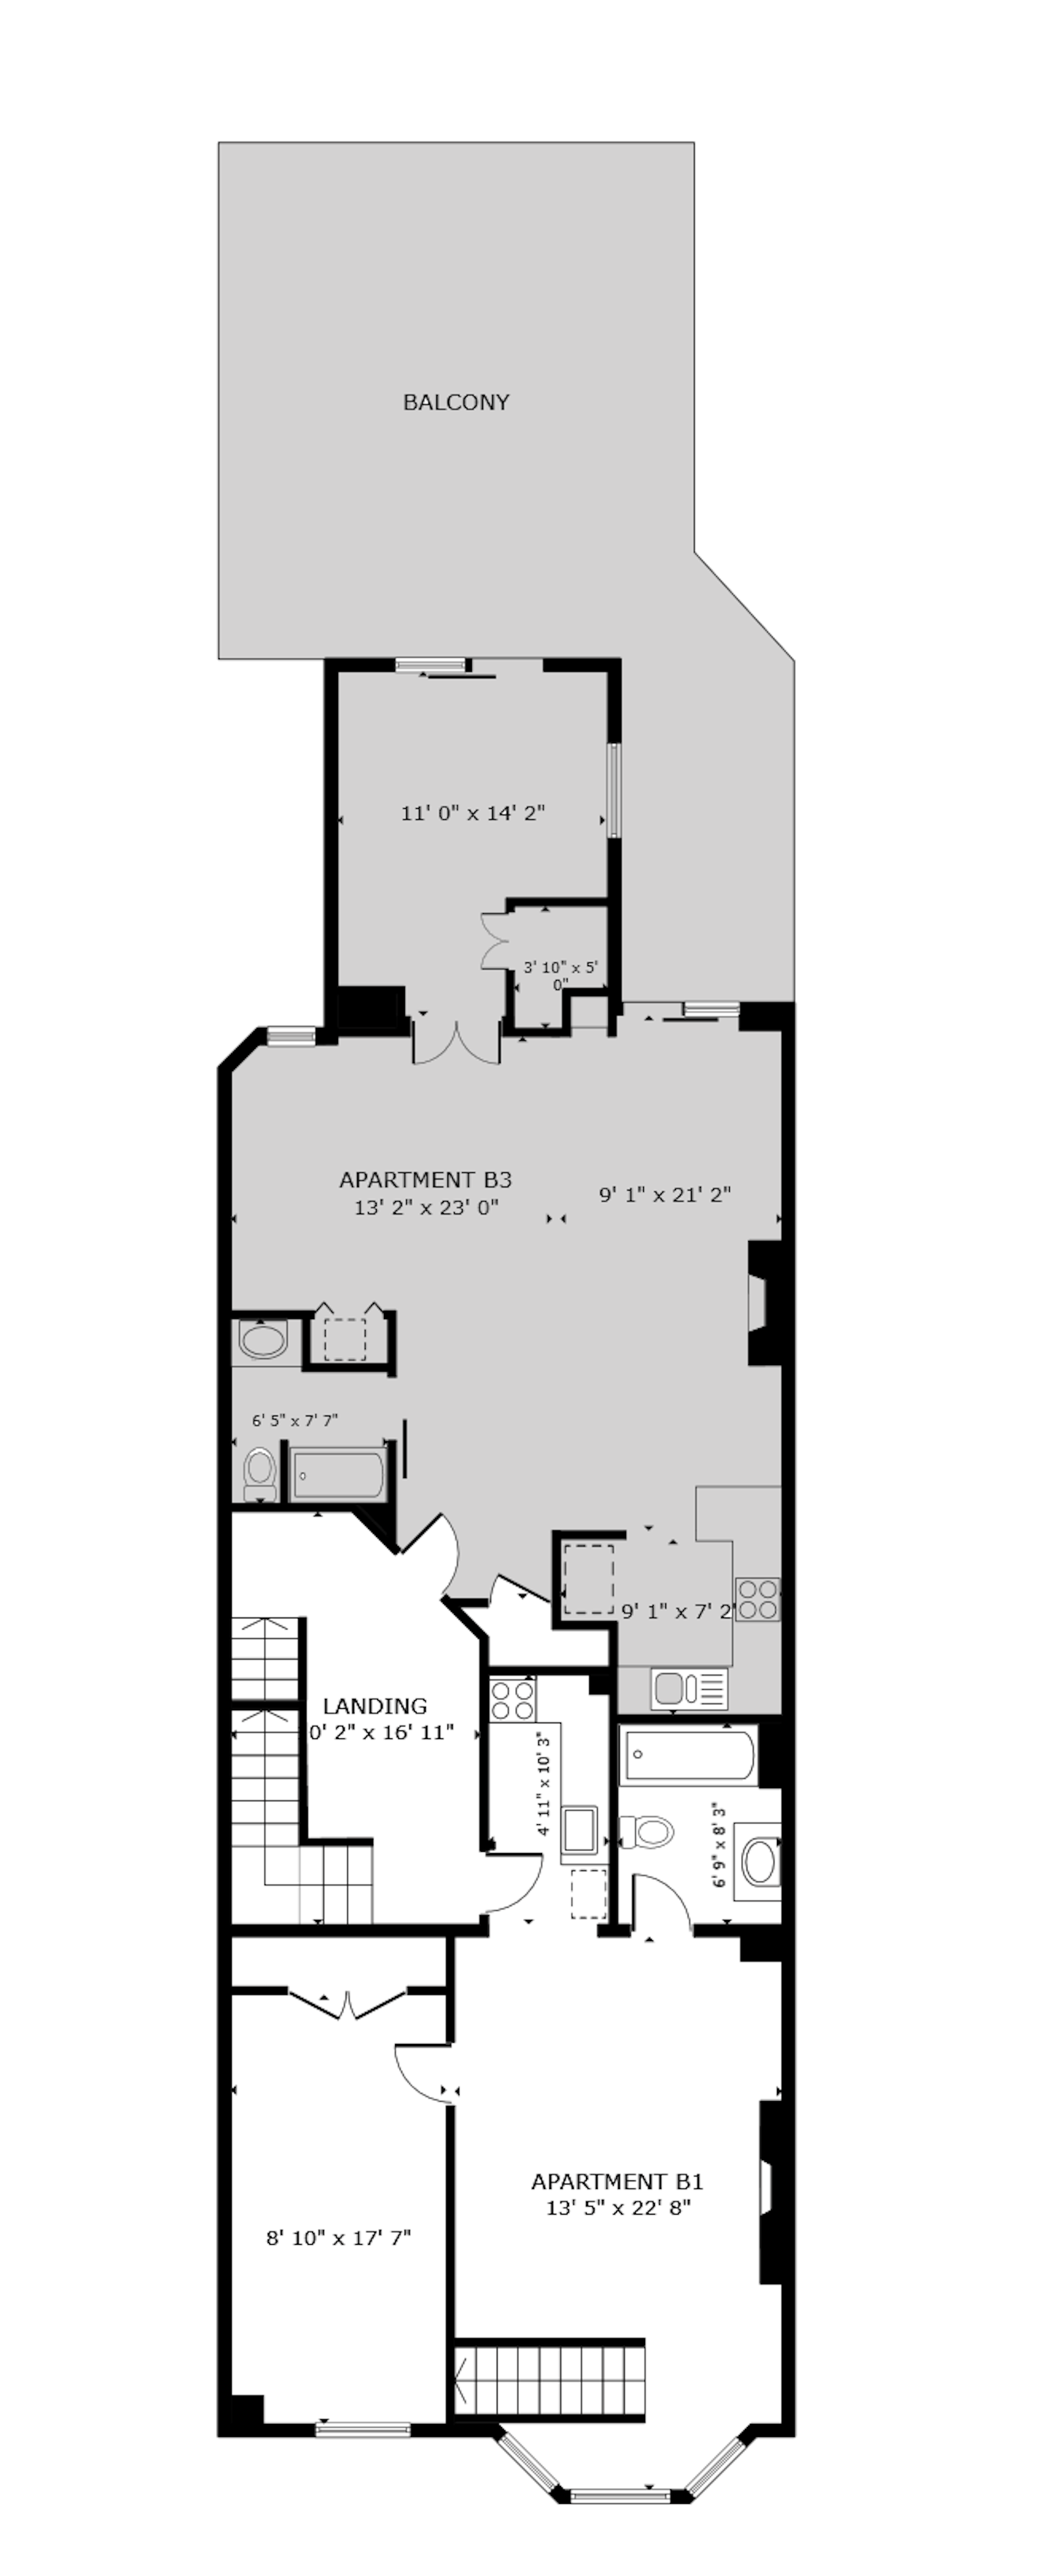 Floorplan for 50 West 86th Street, B3